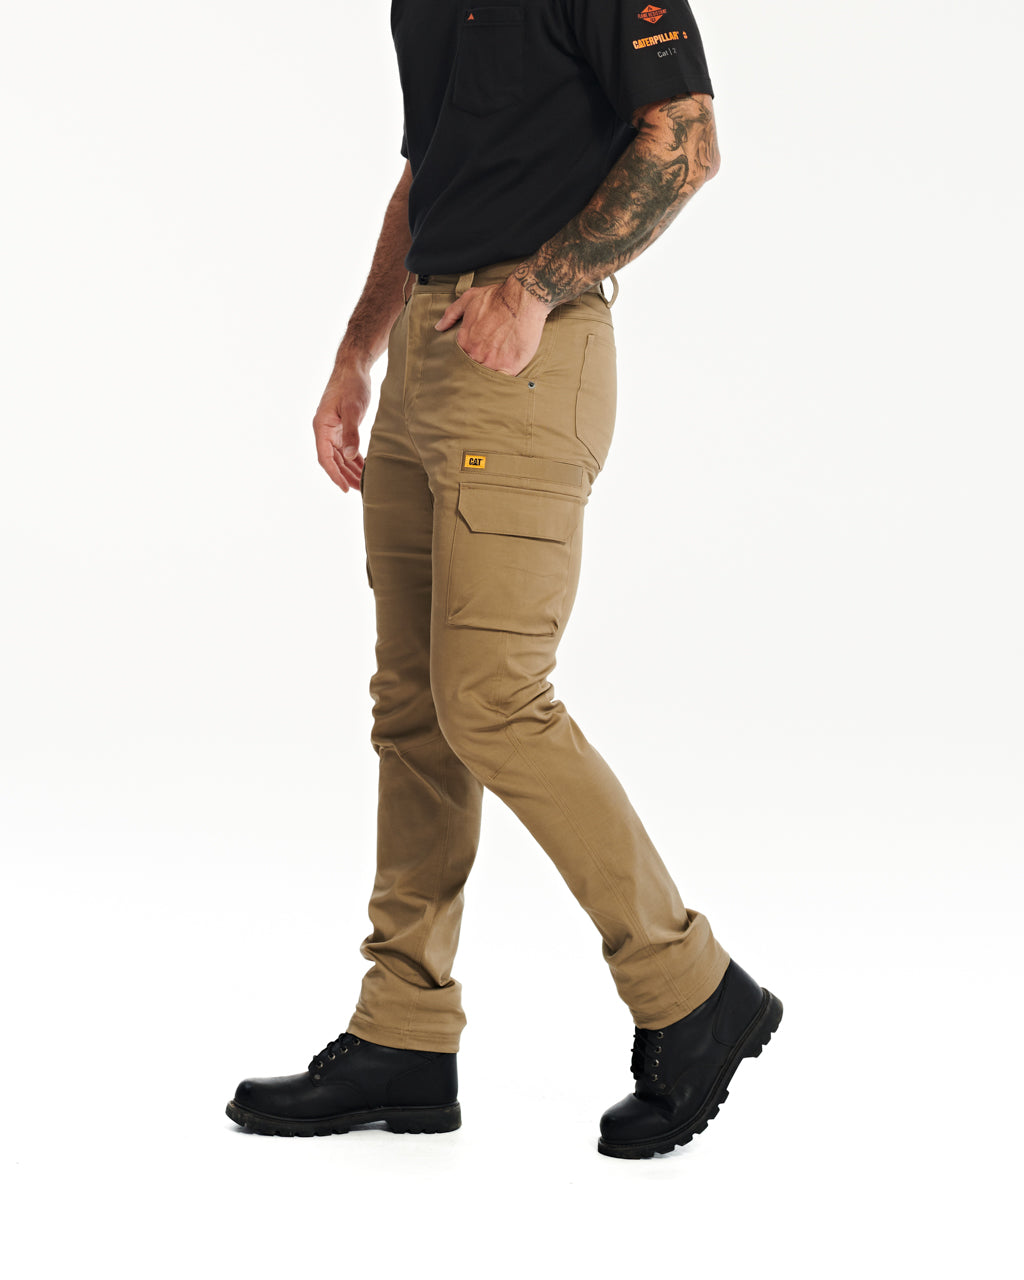 Skylinewears Men cargo pants Workwear Trousers Utility Work Pants with  Cordura Knee Reinforcement Gray W40-L34